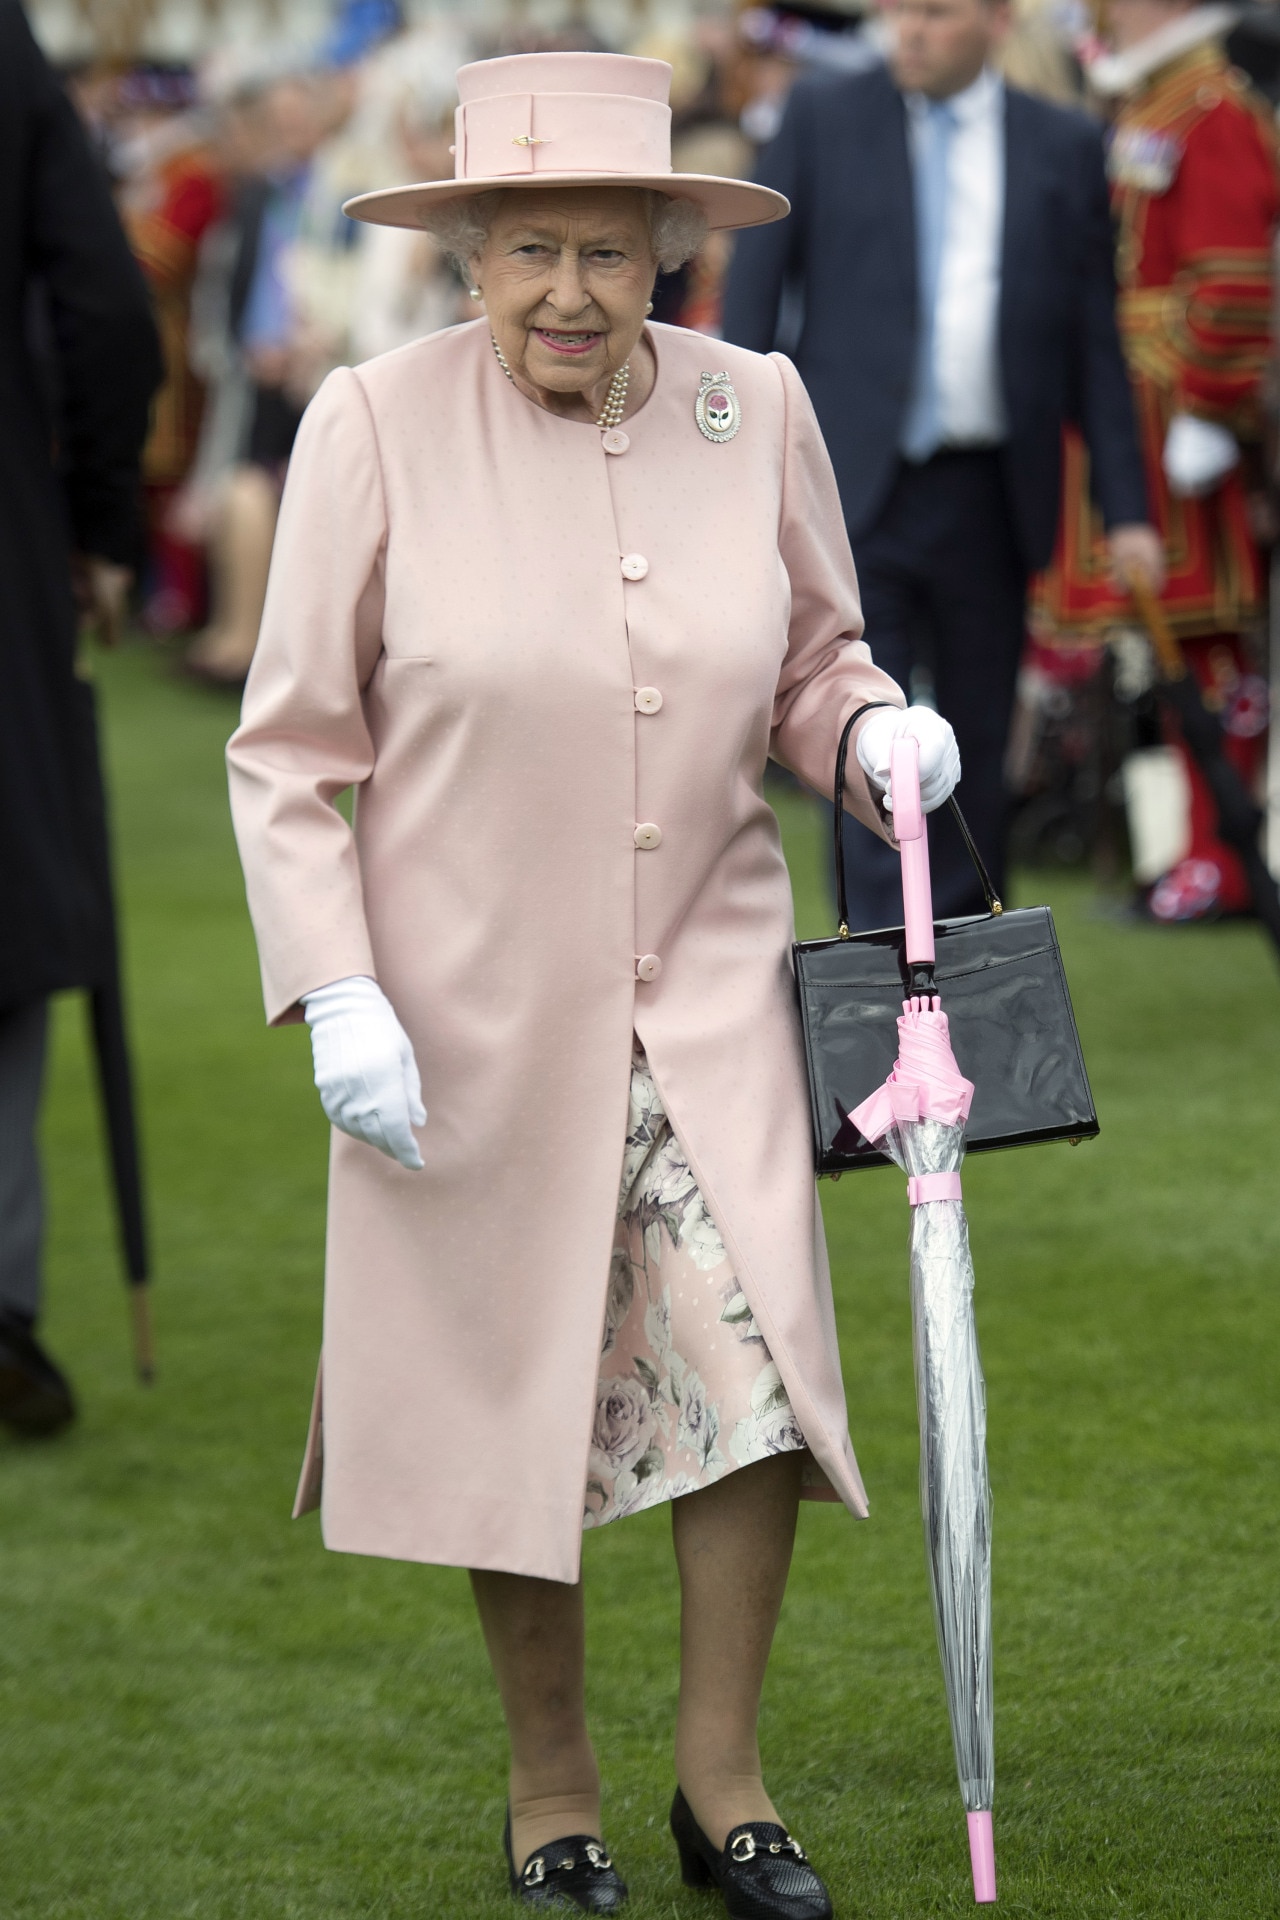 5 fascinating facts about The Queen's handbag habits - Vogue Australia